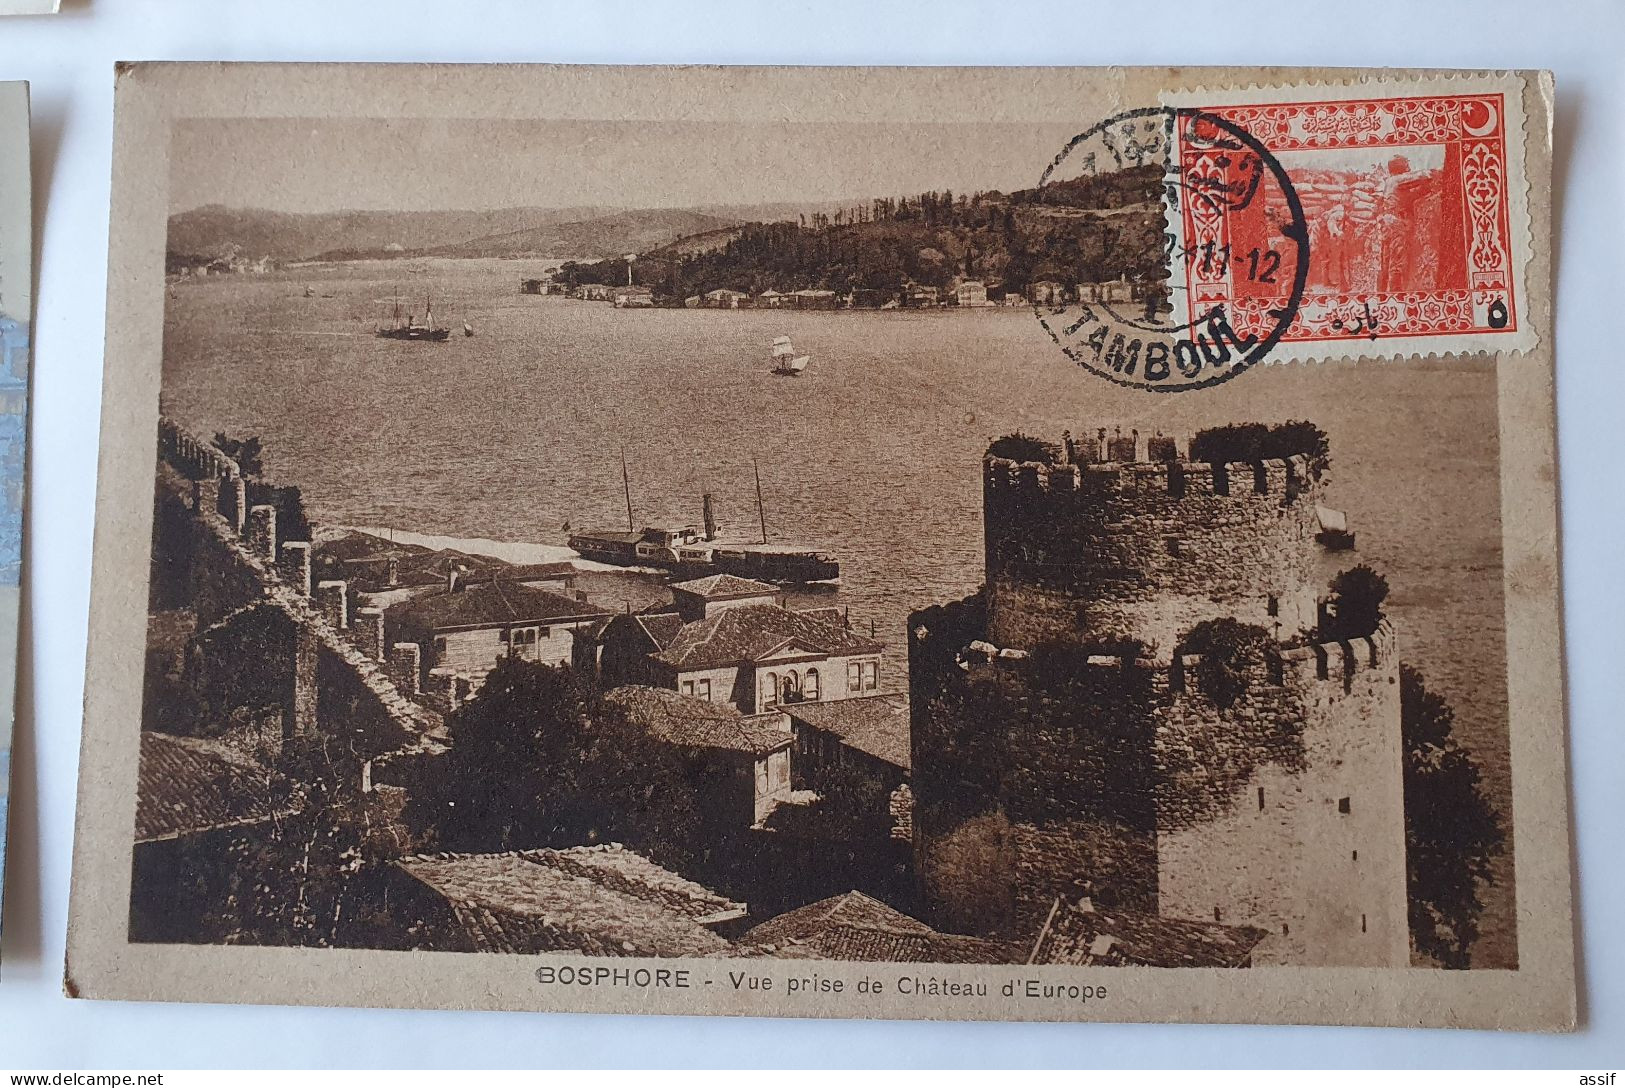 17 cpa Constantinople cachet Stamboul 12/11/1922